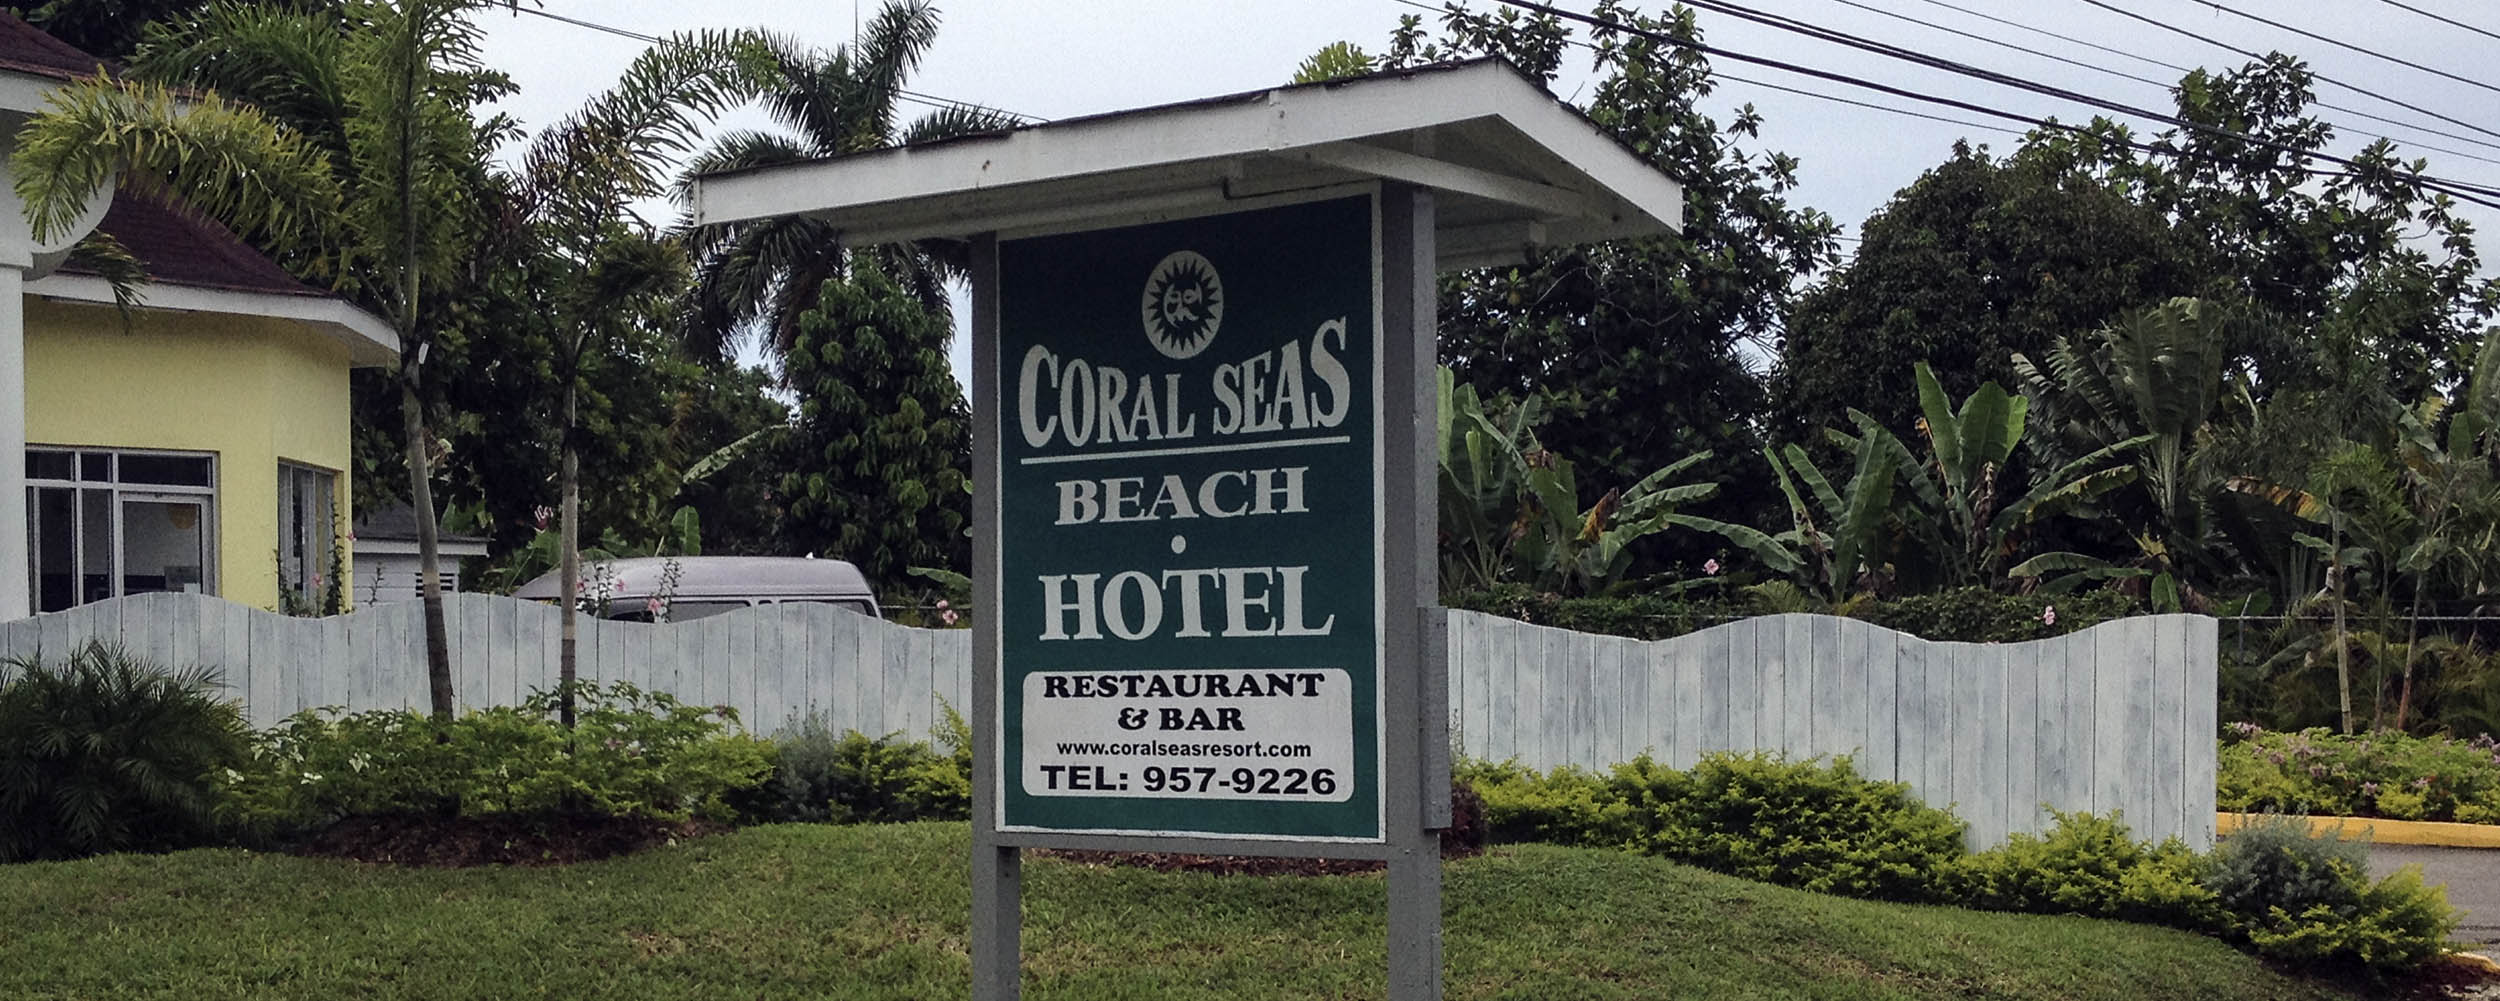 Coral Seas Beach Hotel - Negril Jamaica